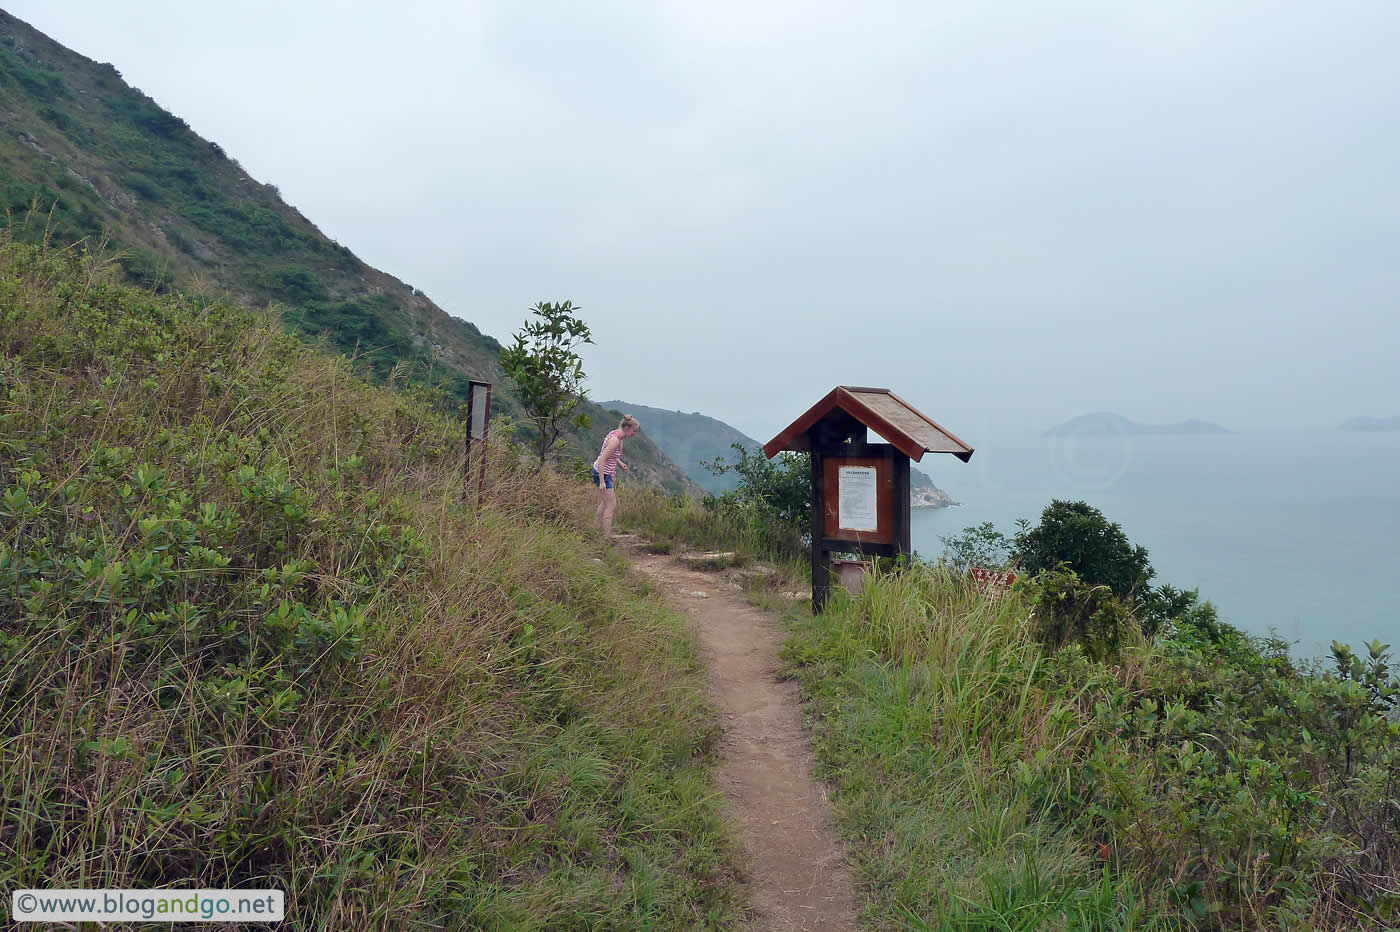 Lantau Trail 7 - Toward section 8